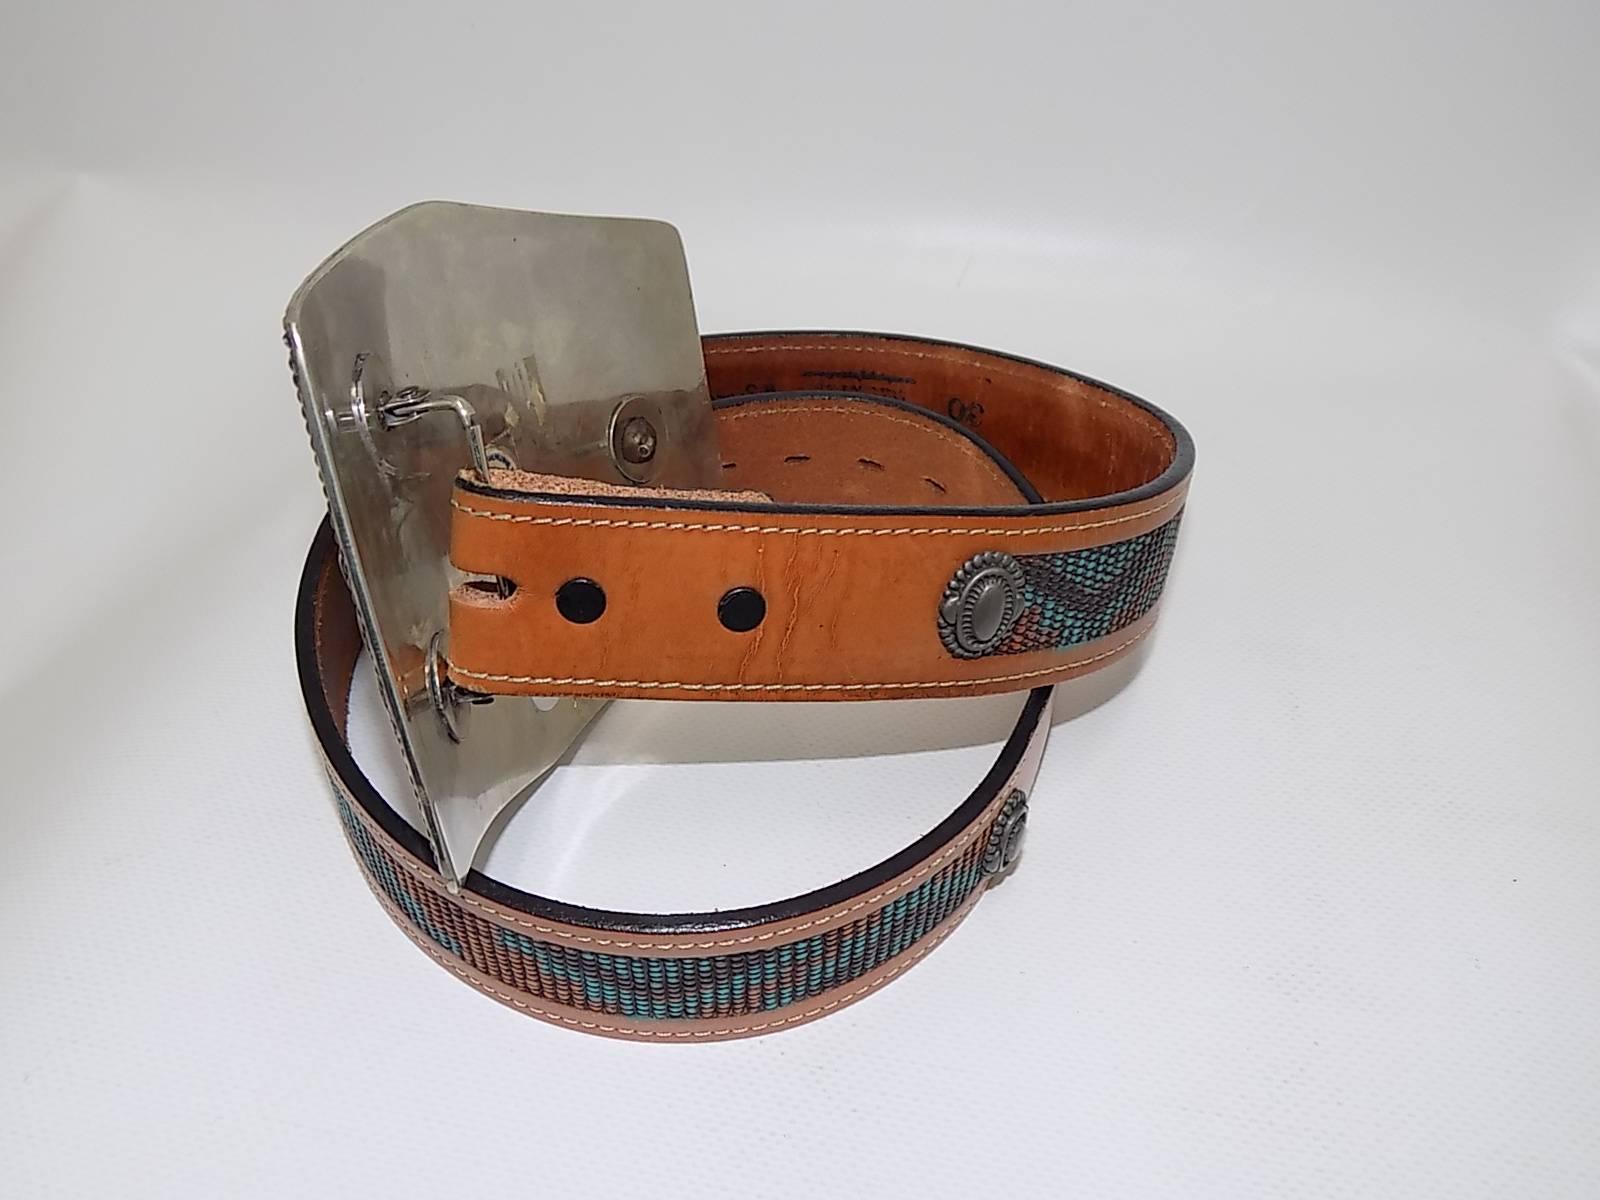 Black Cowboy legends massive silver hand crafted belt w turquoise /eagle buckle